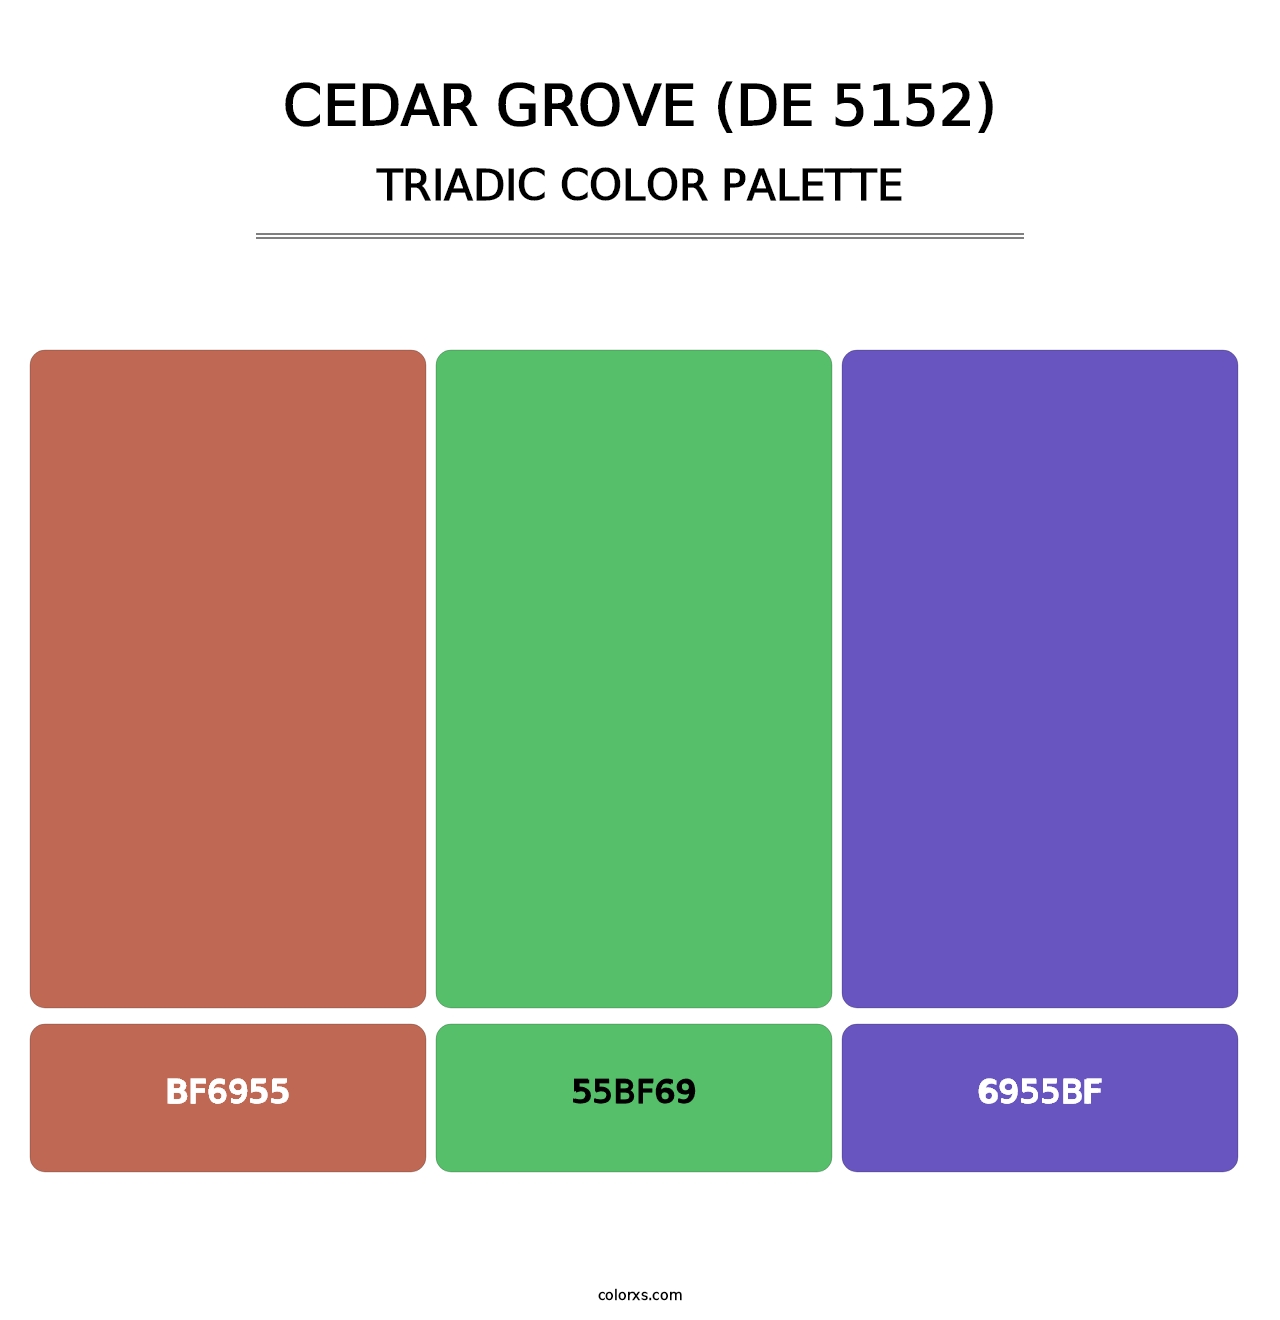 Cedar Grove (DE 5152) - Triadic Color Palette